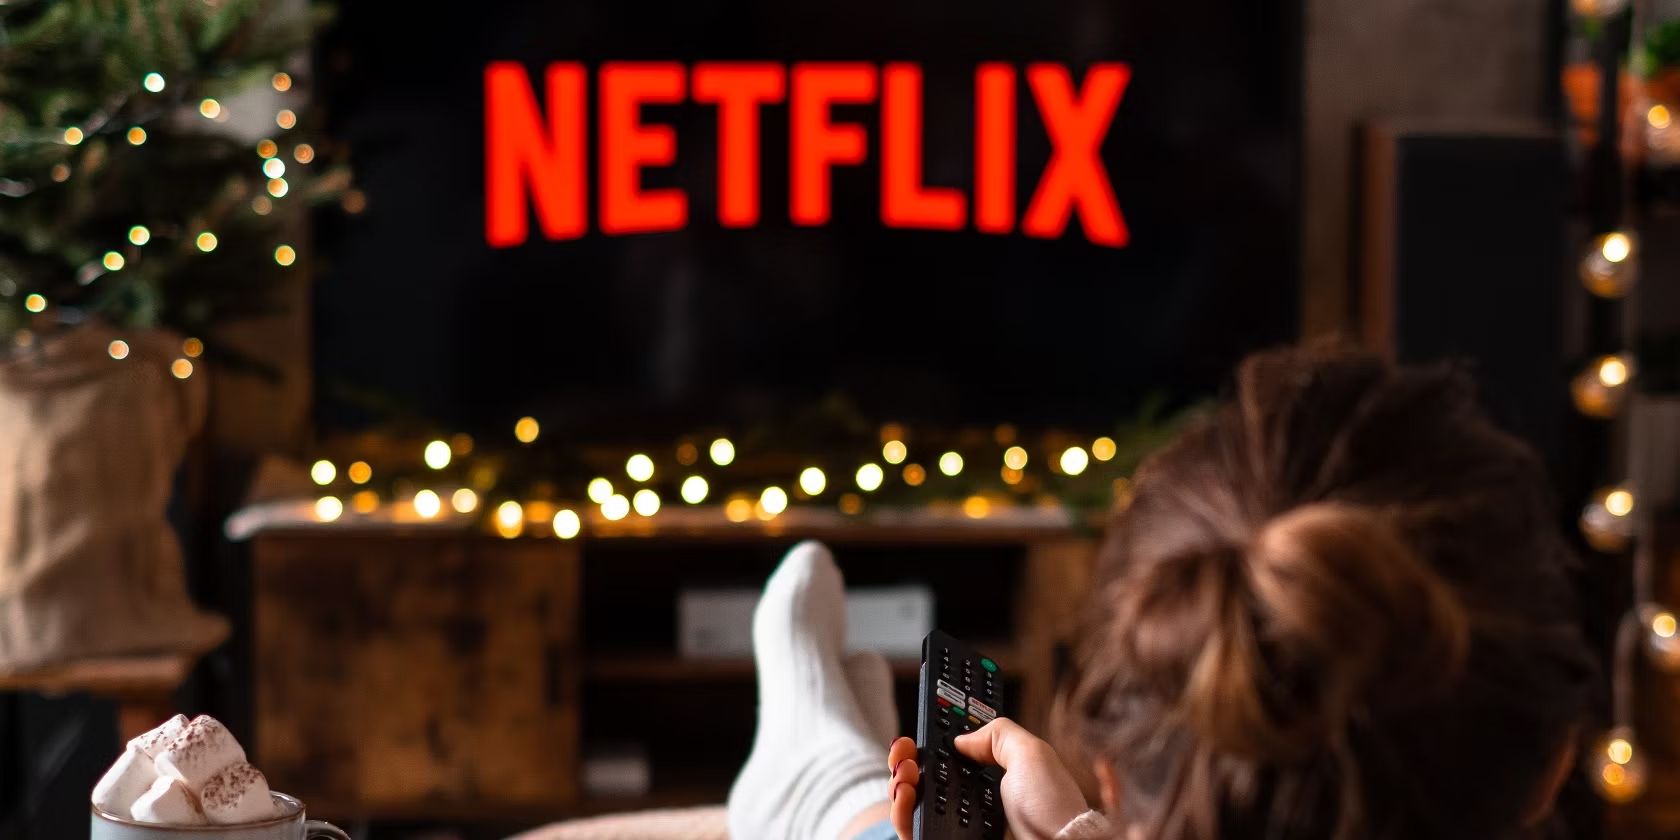 How To Make Netflix Full Screen On Smart TV